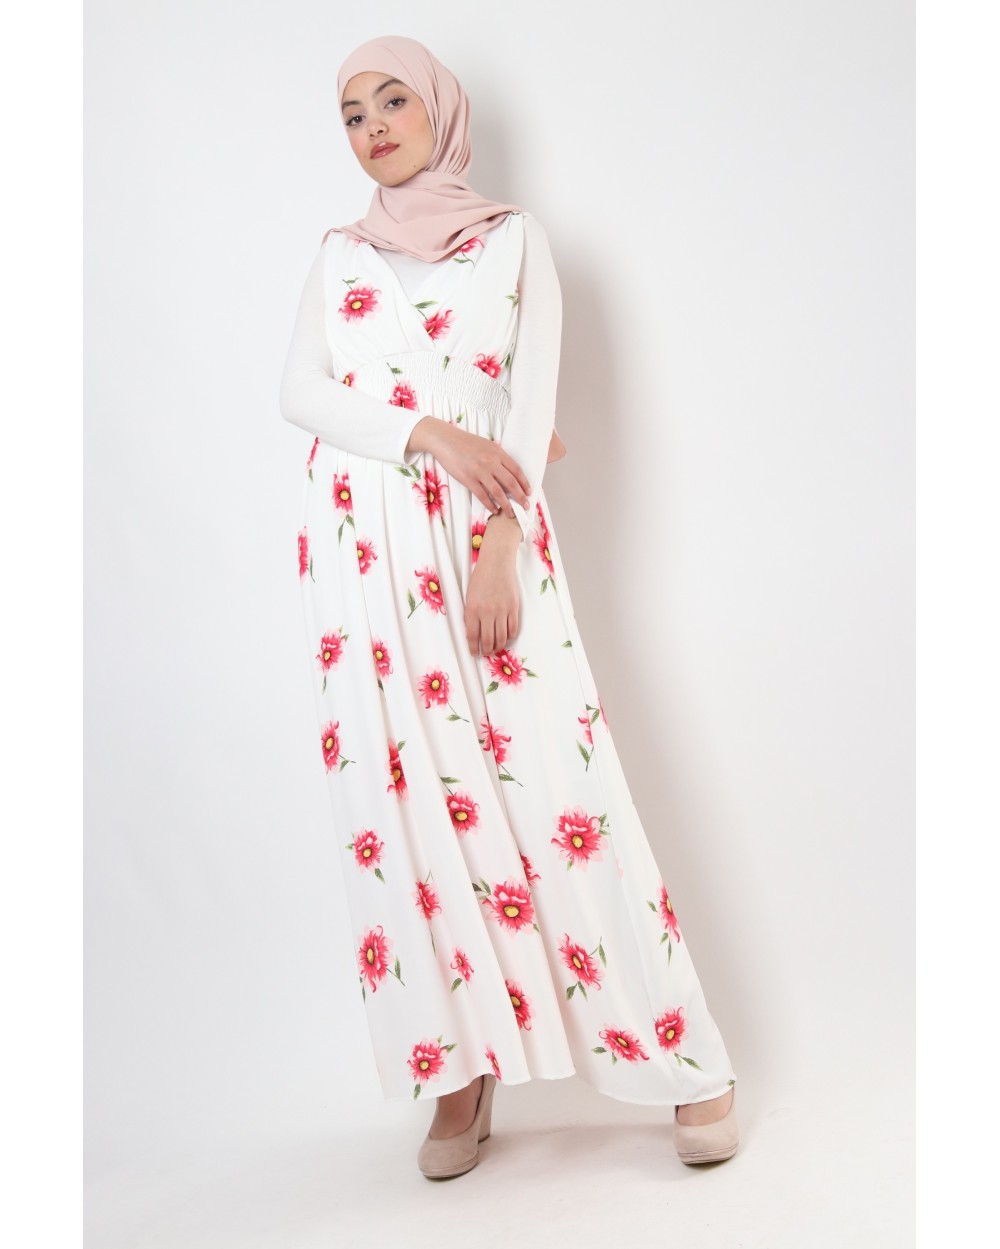 ANYA long sleeveless floral dress